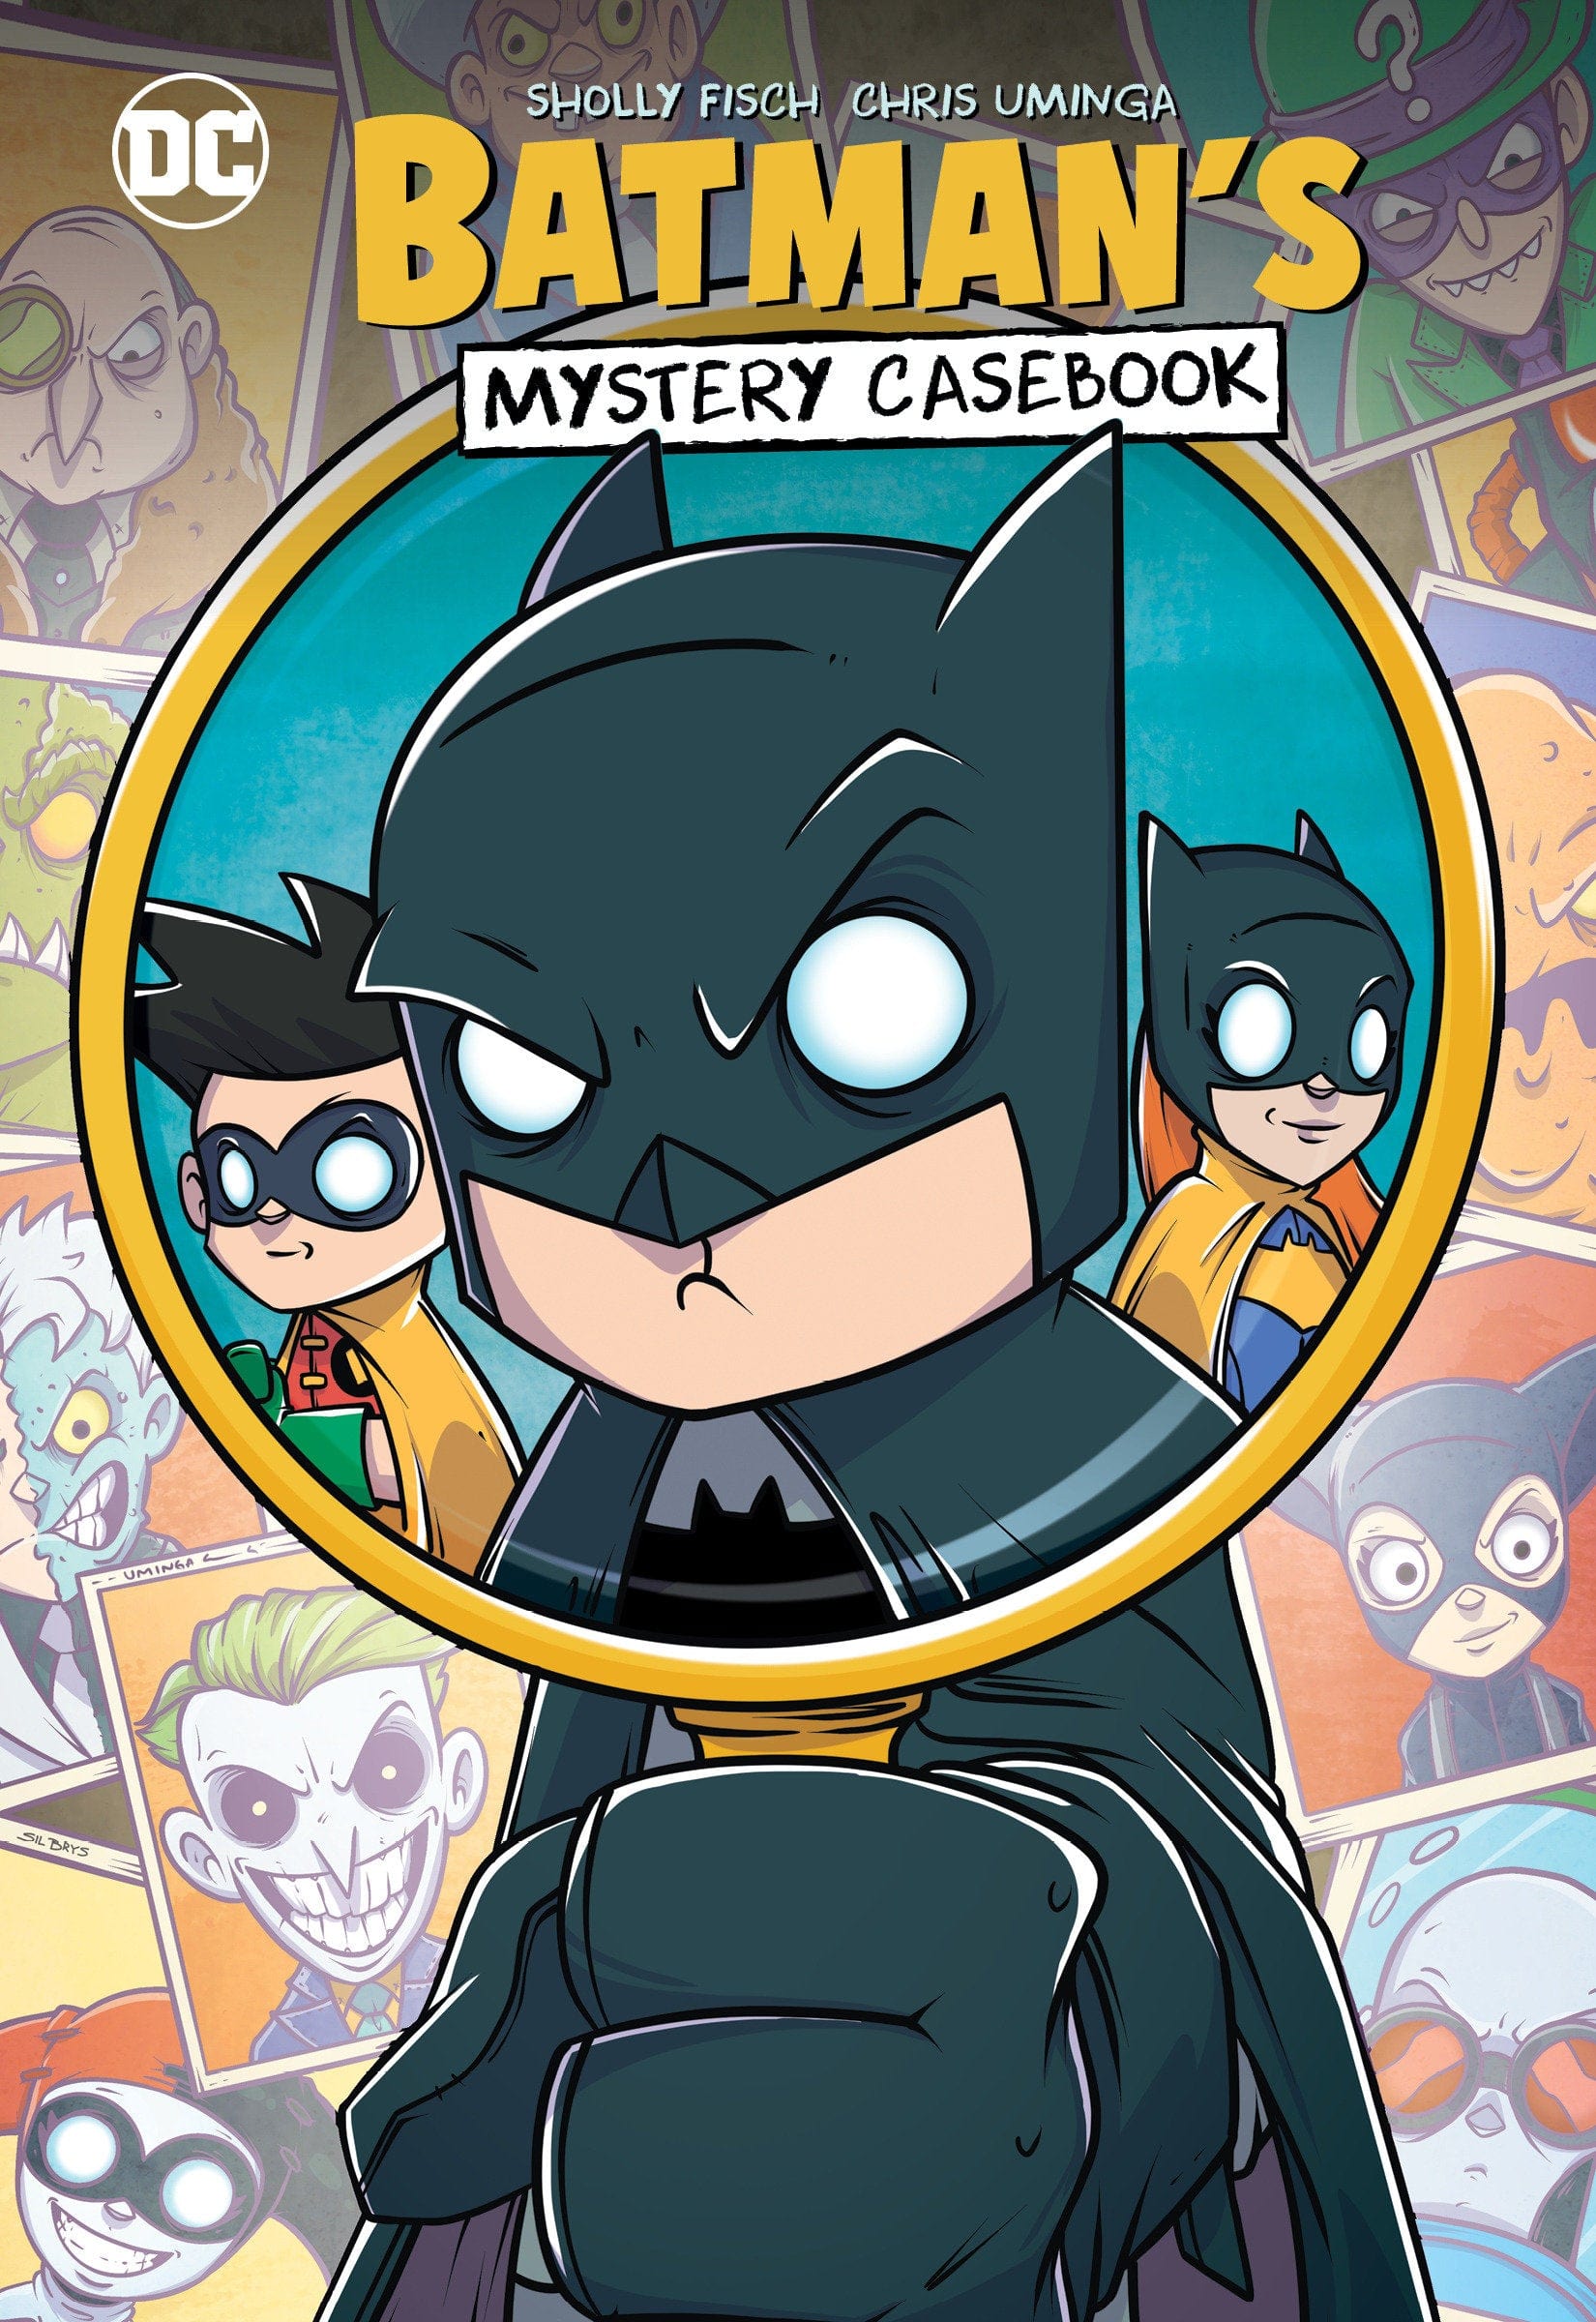 Batman's Mystery Casebook - Third Eye